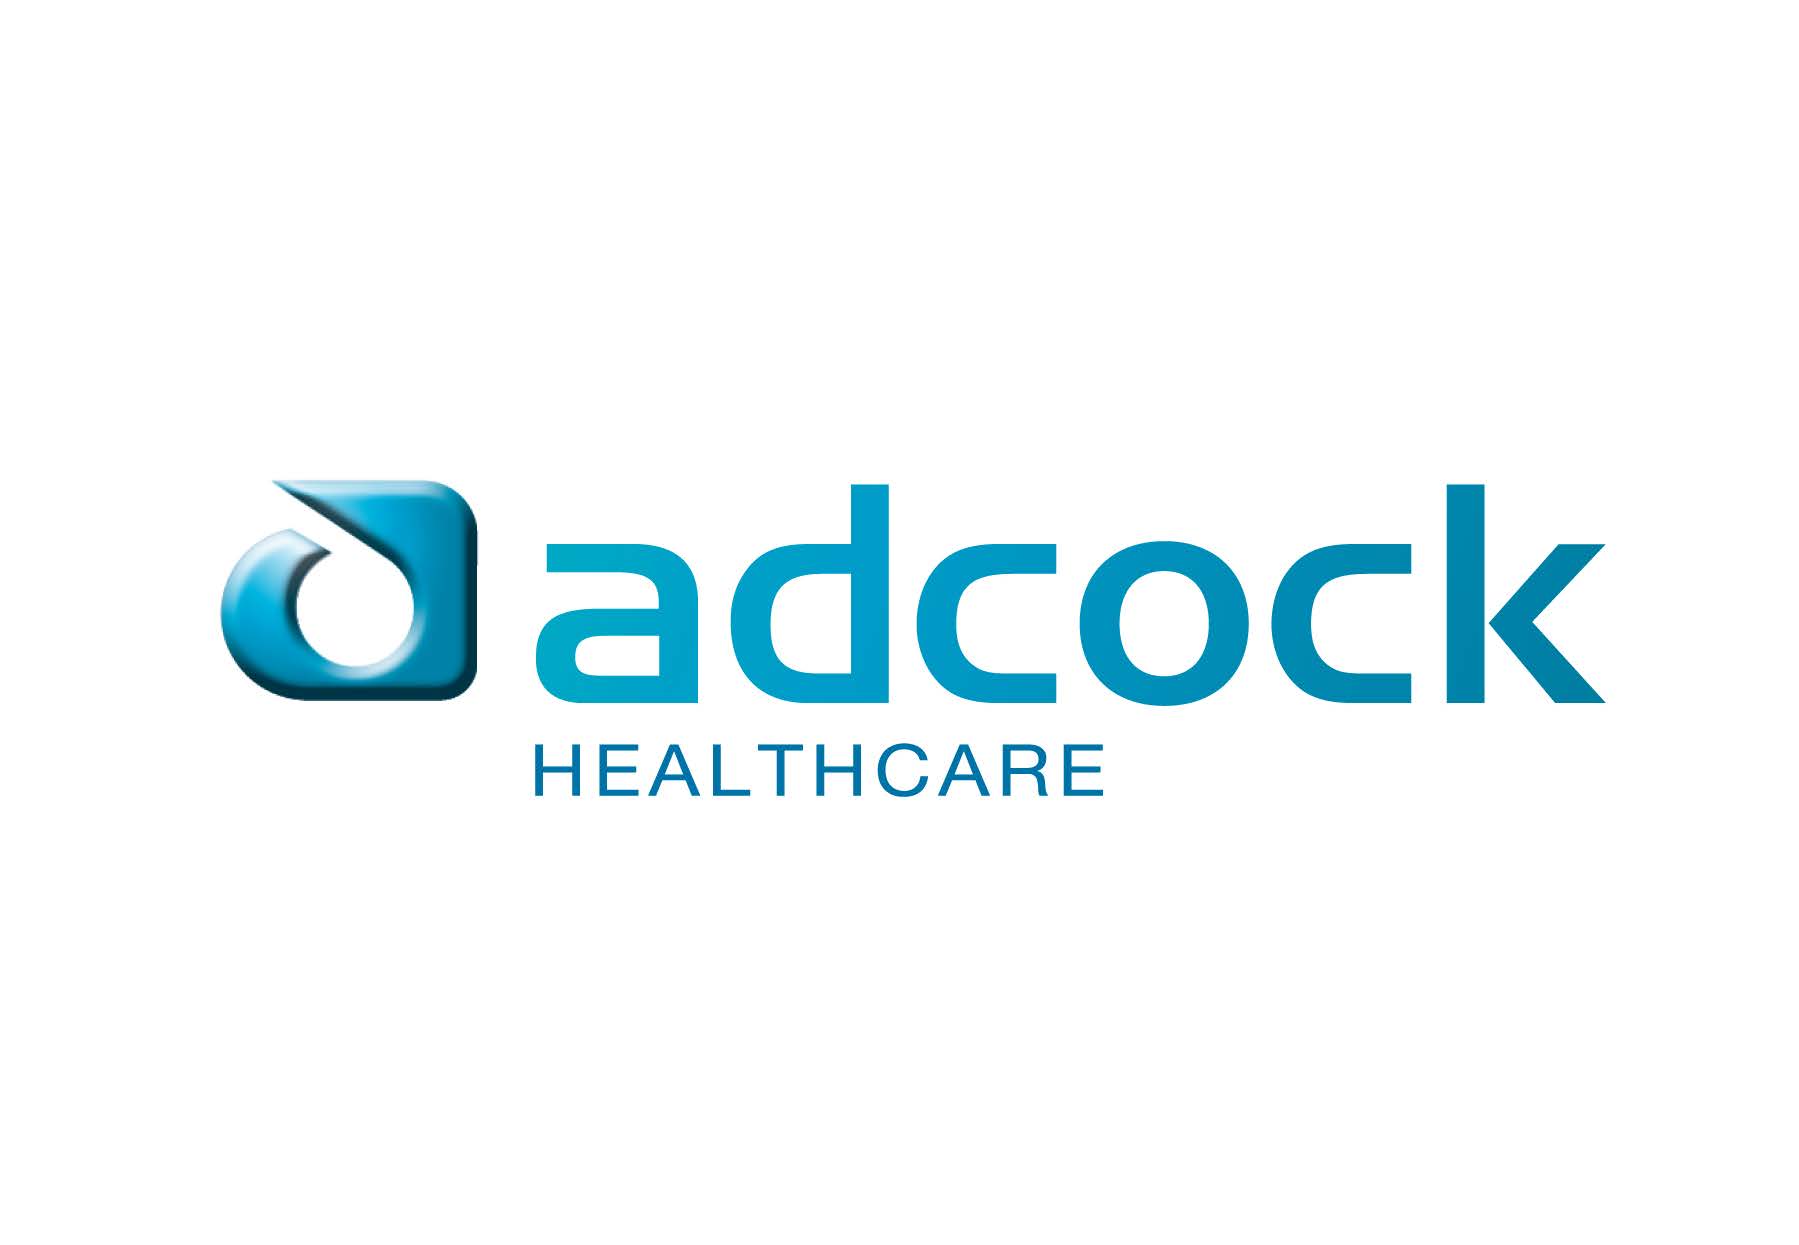 adcock ingram corporate identity design